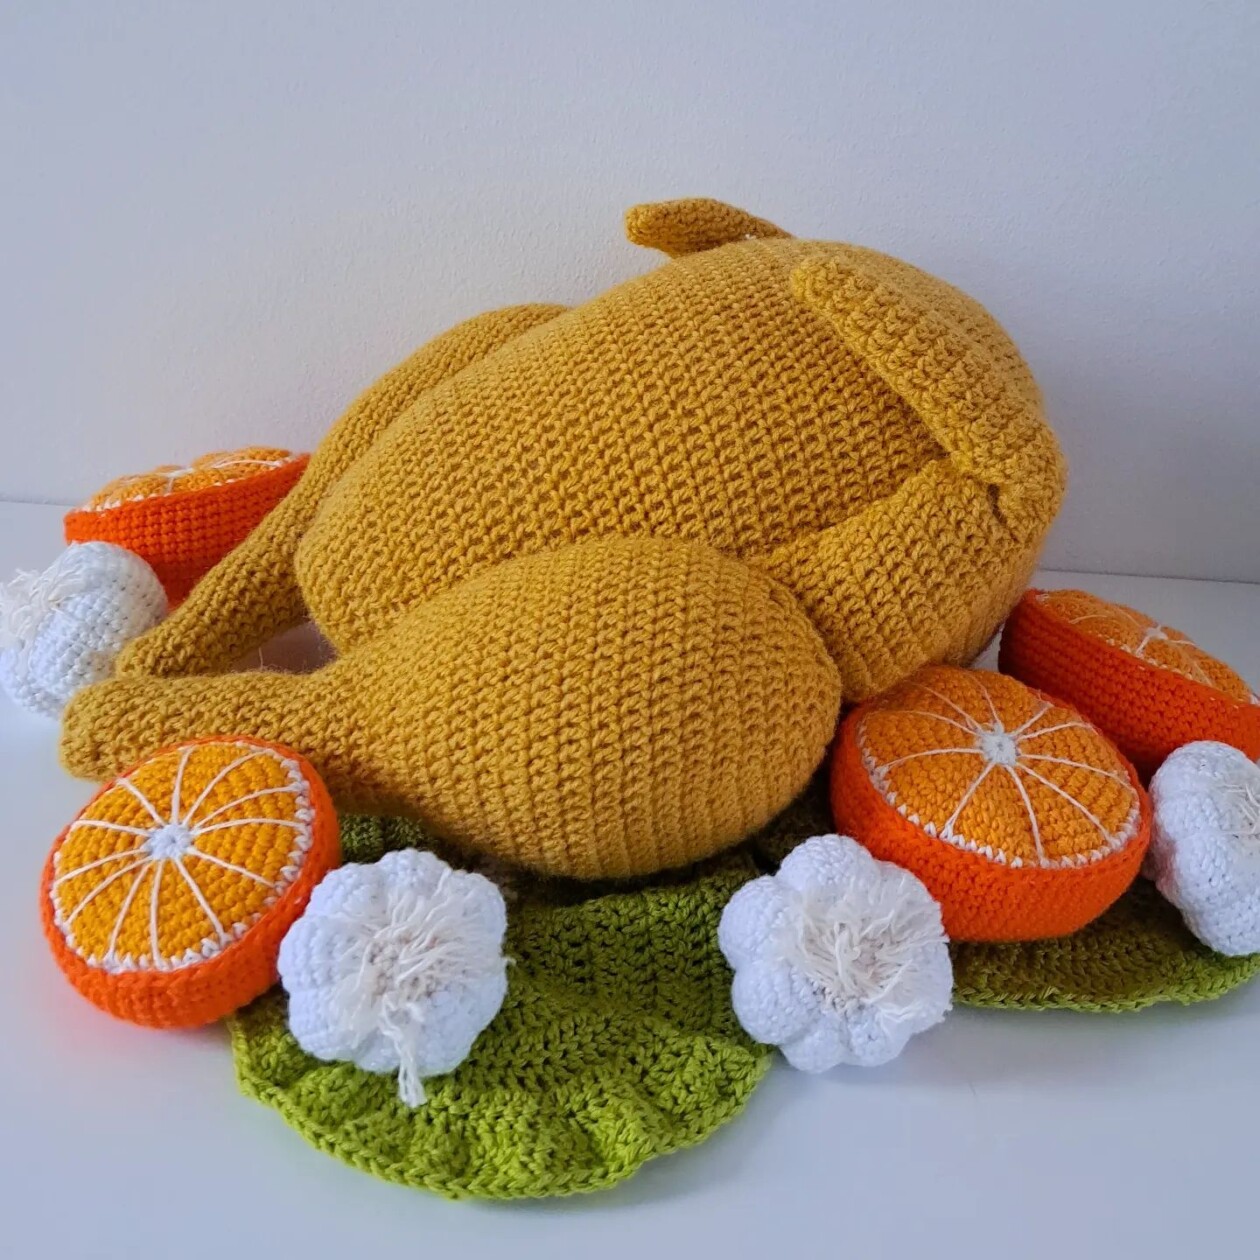 Whimsical Food Crochet Sculptures By Maria Skog (20)